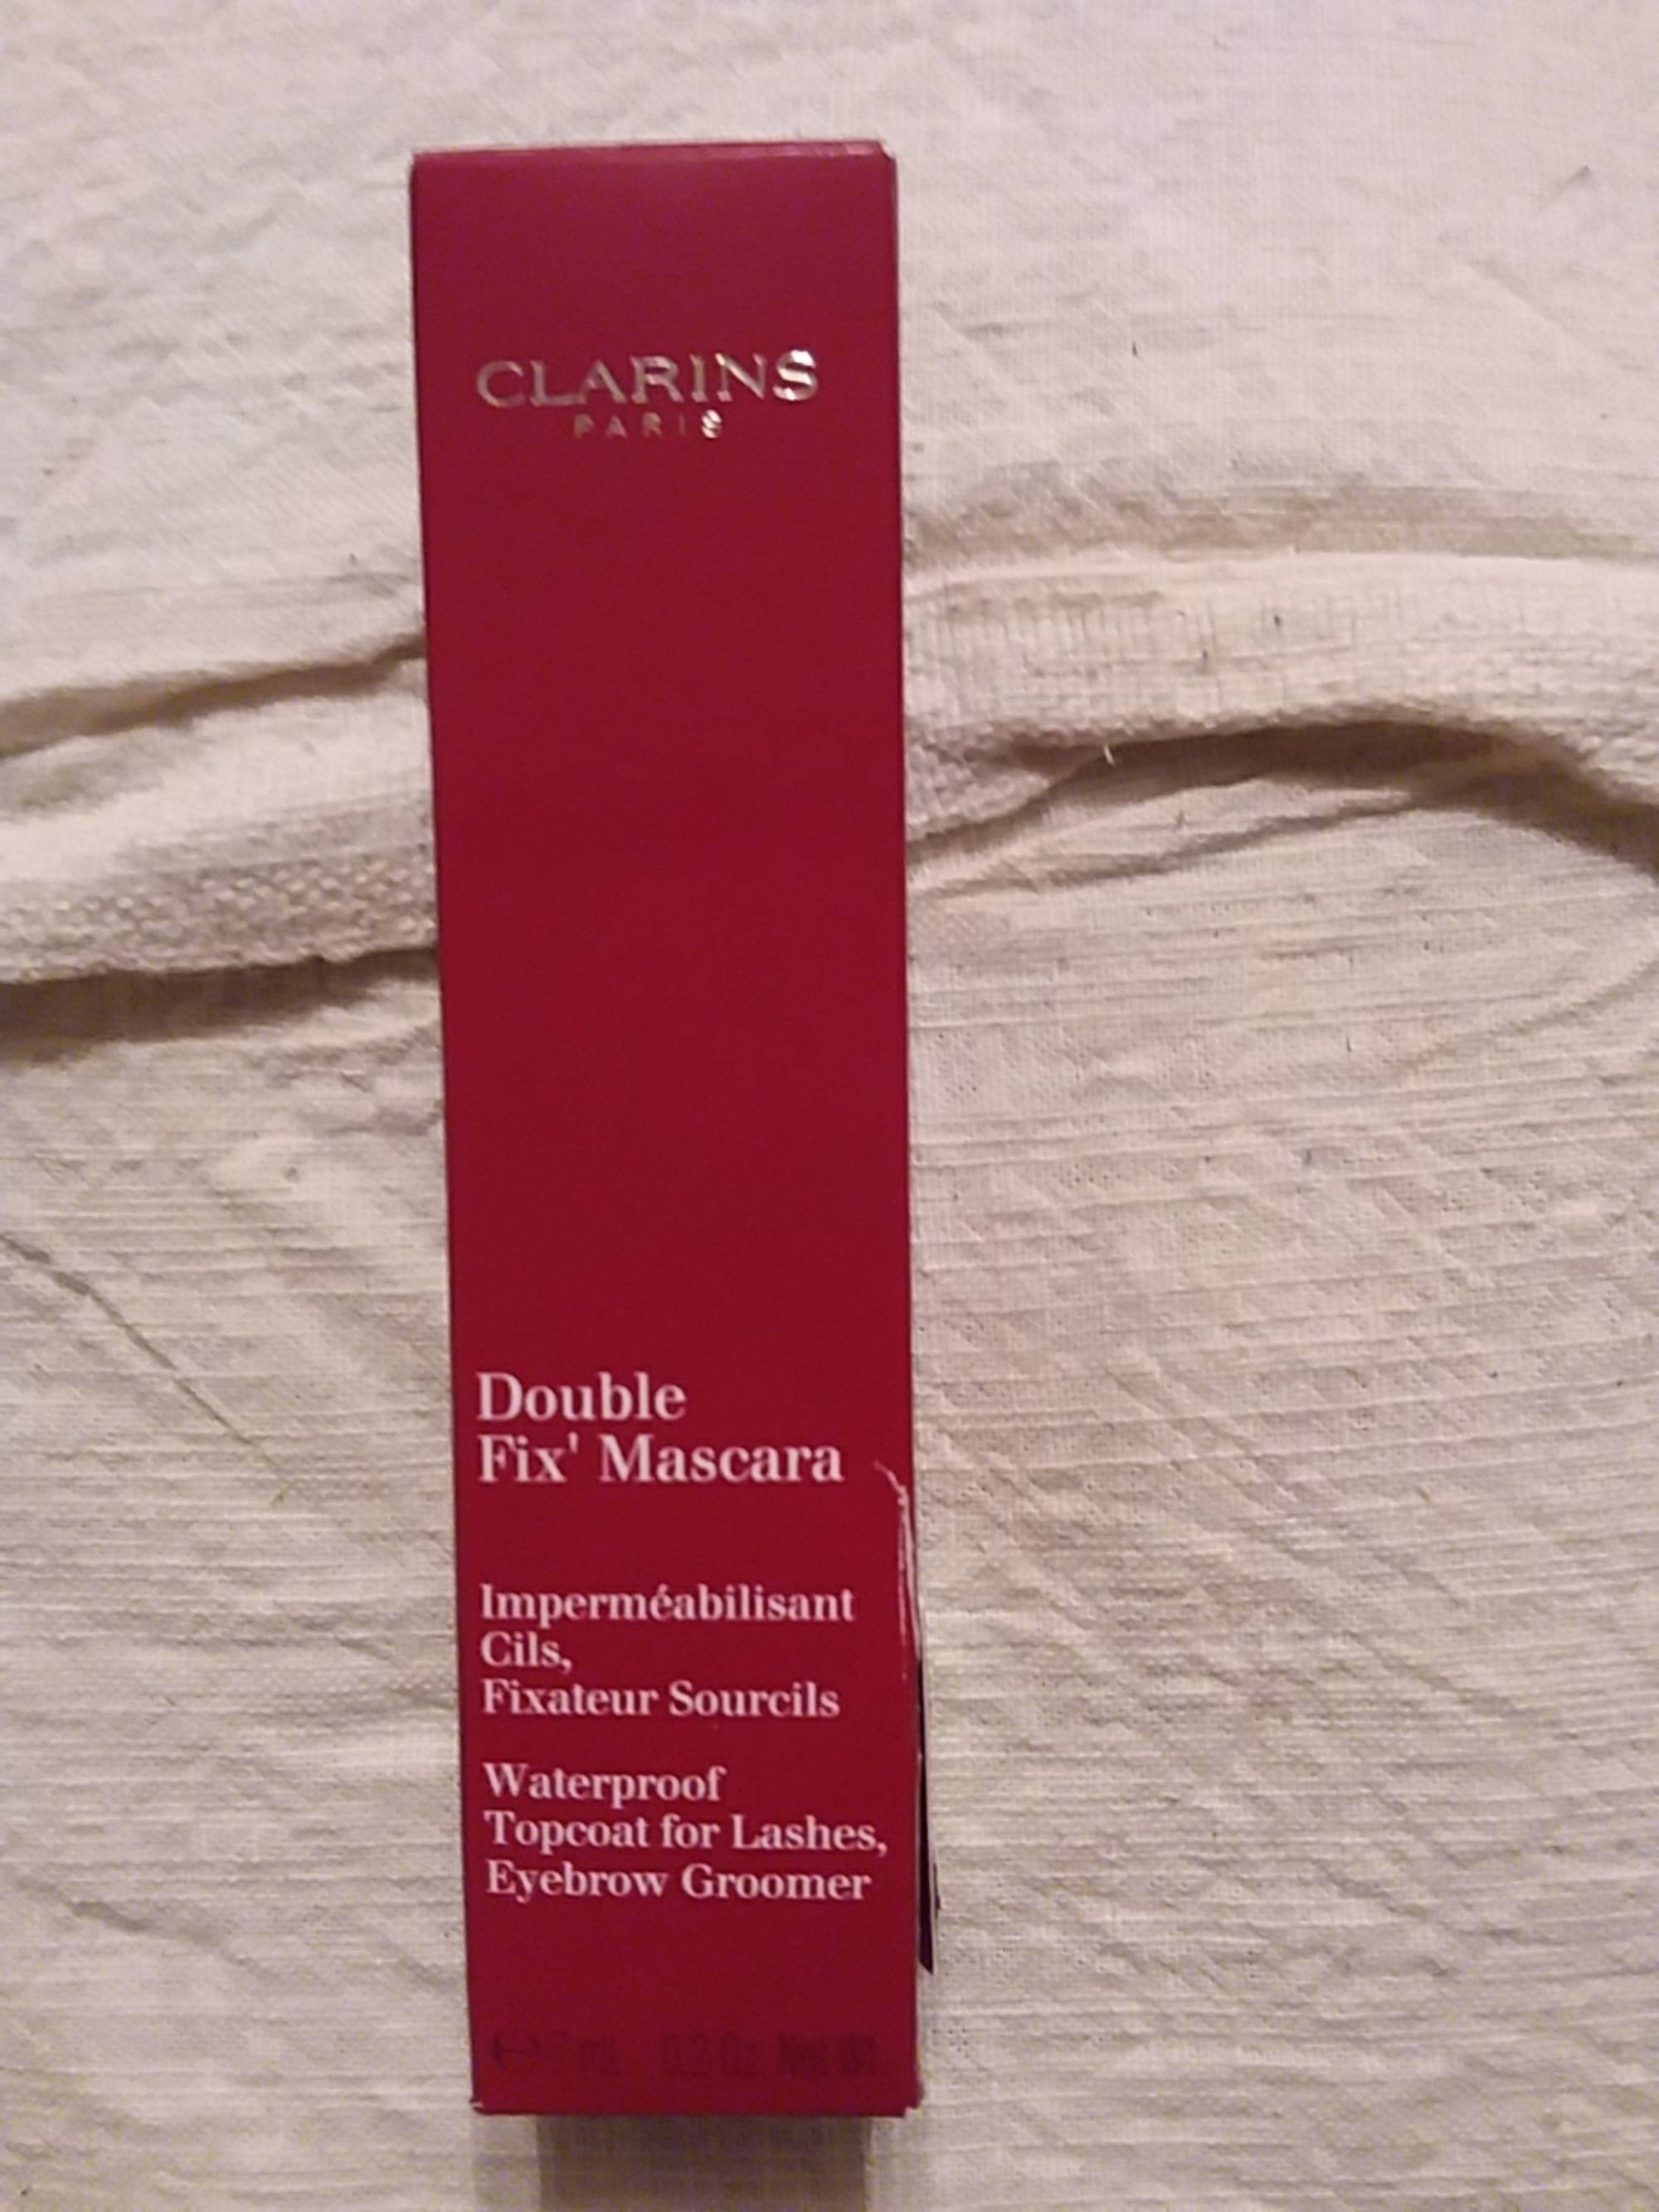 CLARINS PARIS - Double fix' mascara